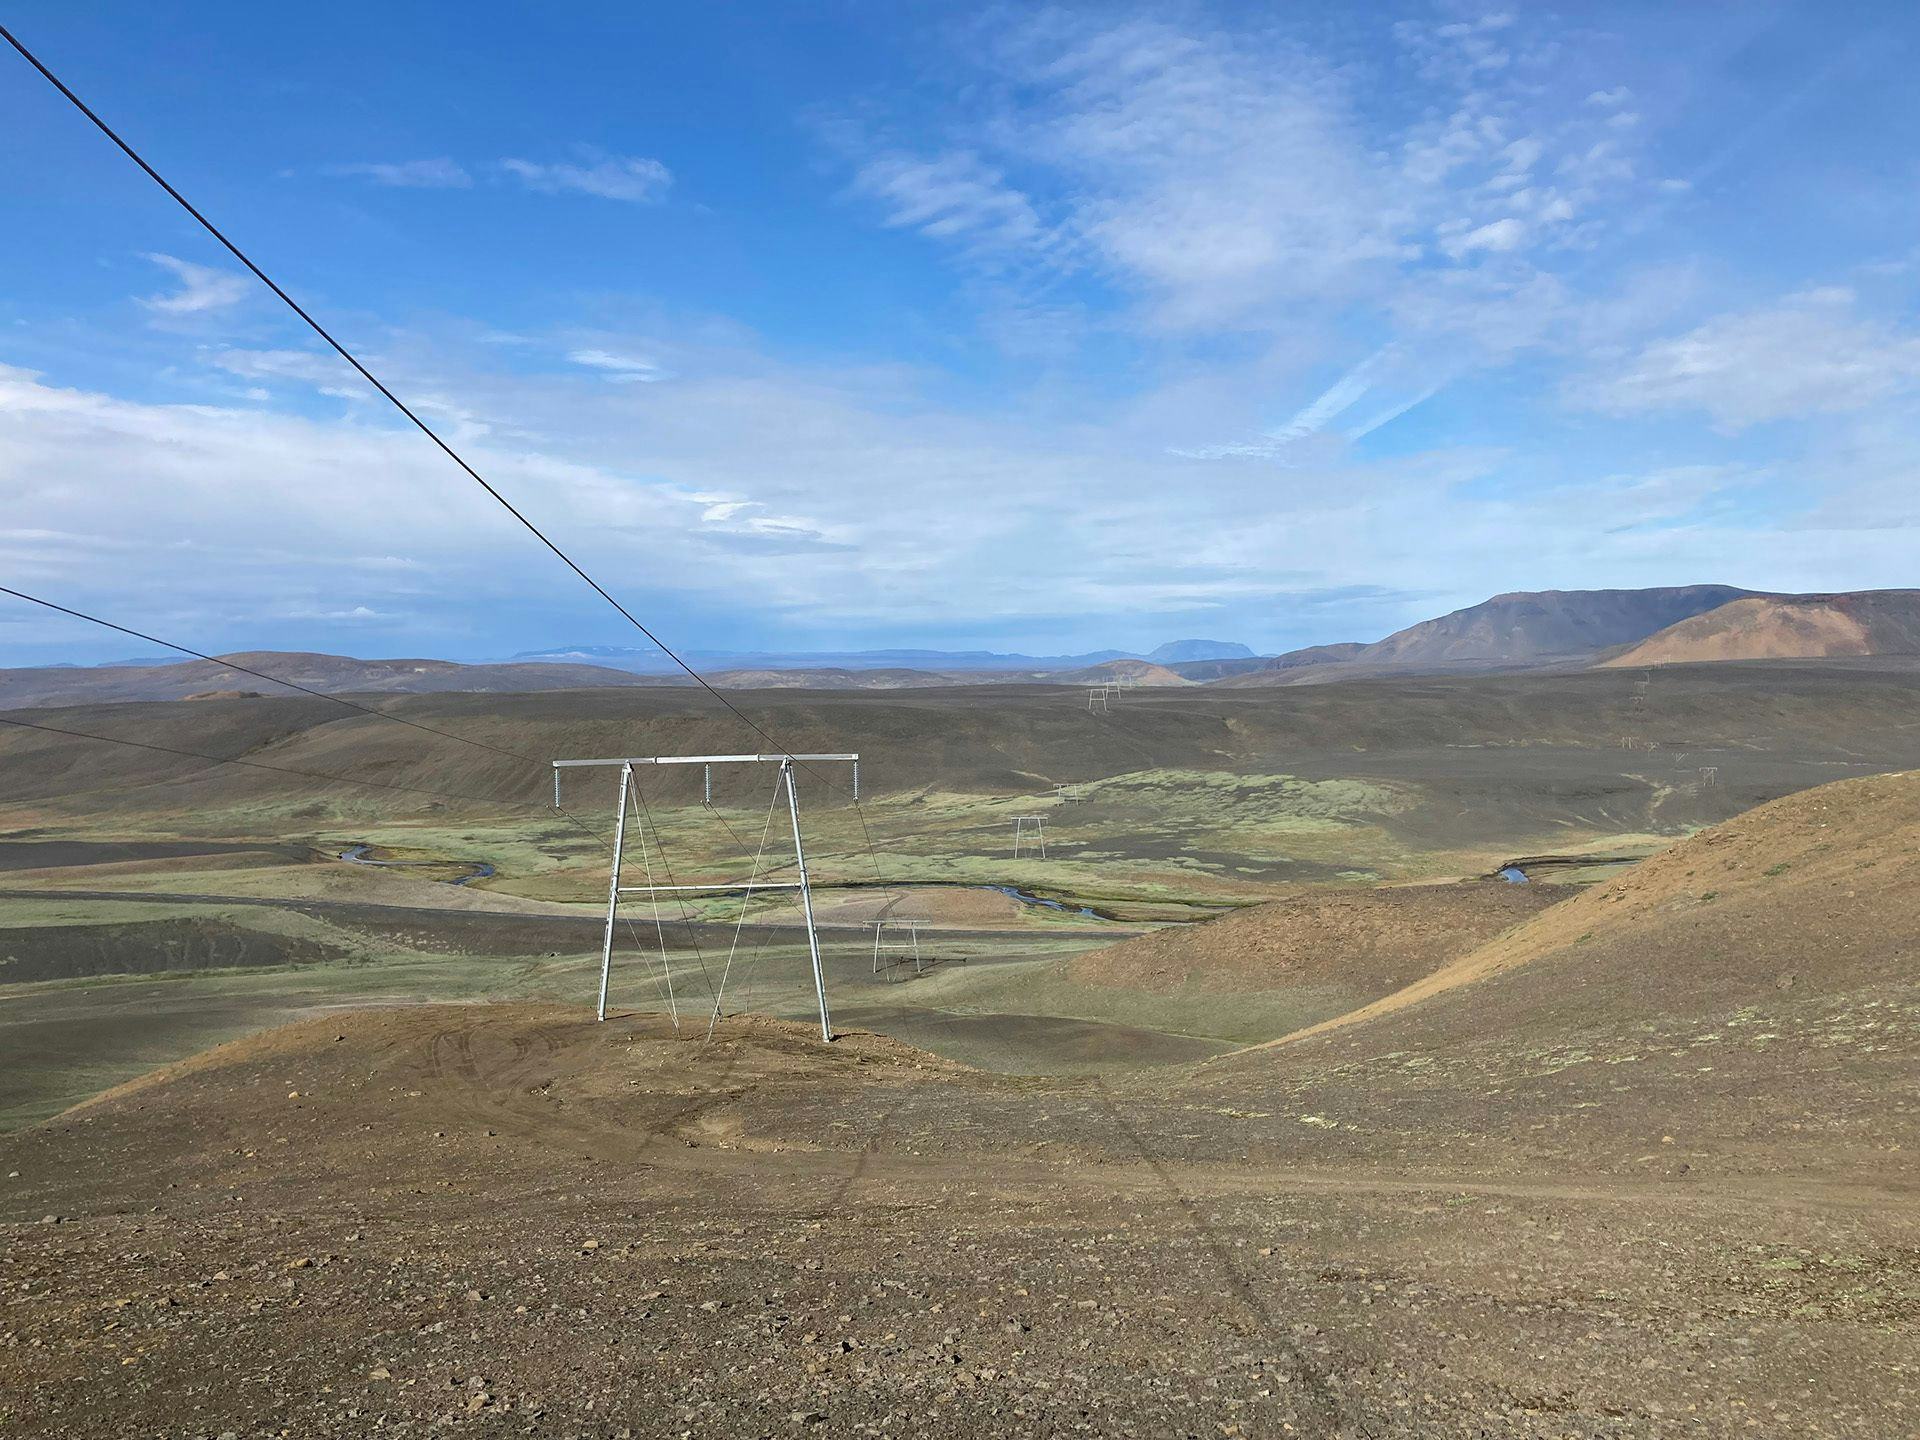 A single electricity pylon centered in a sparse landscape